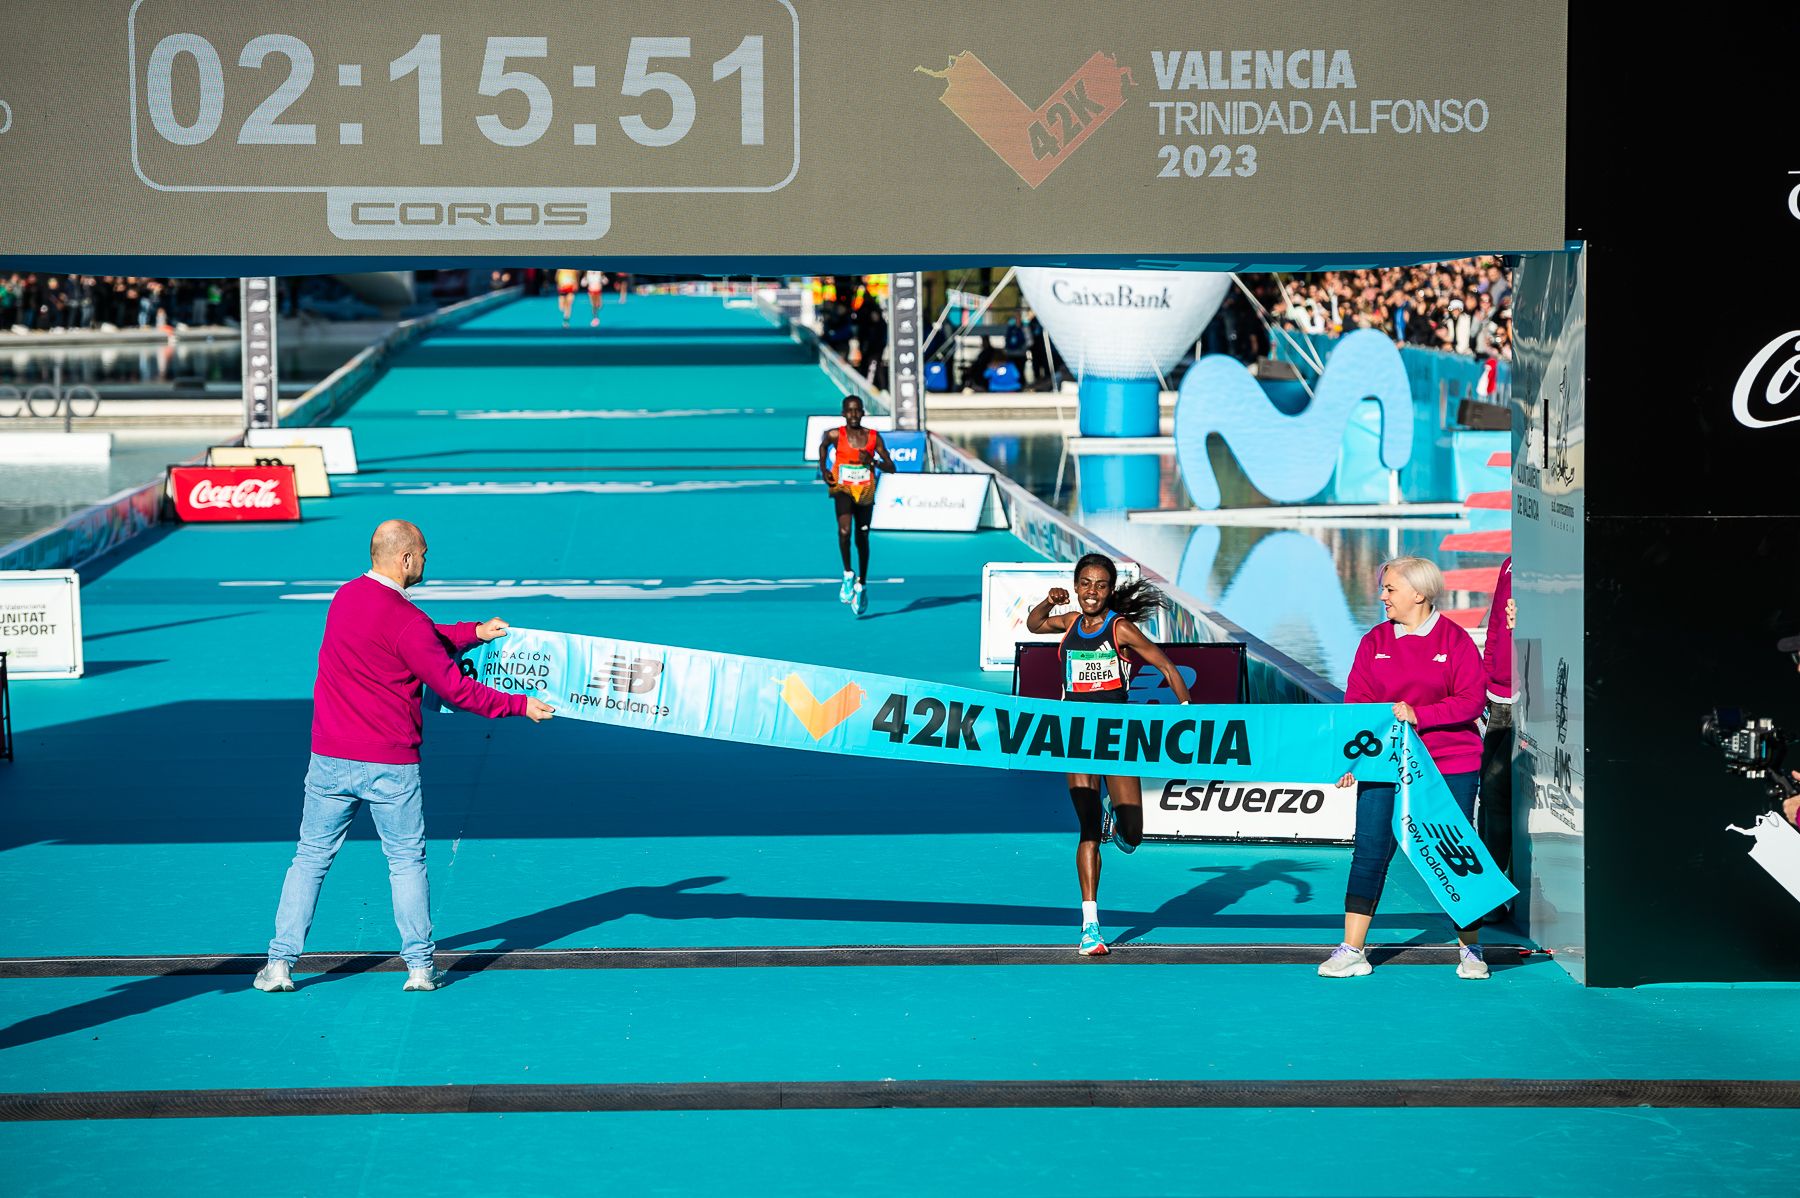 Мощный марафон в Валенсии